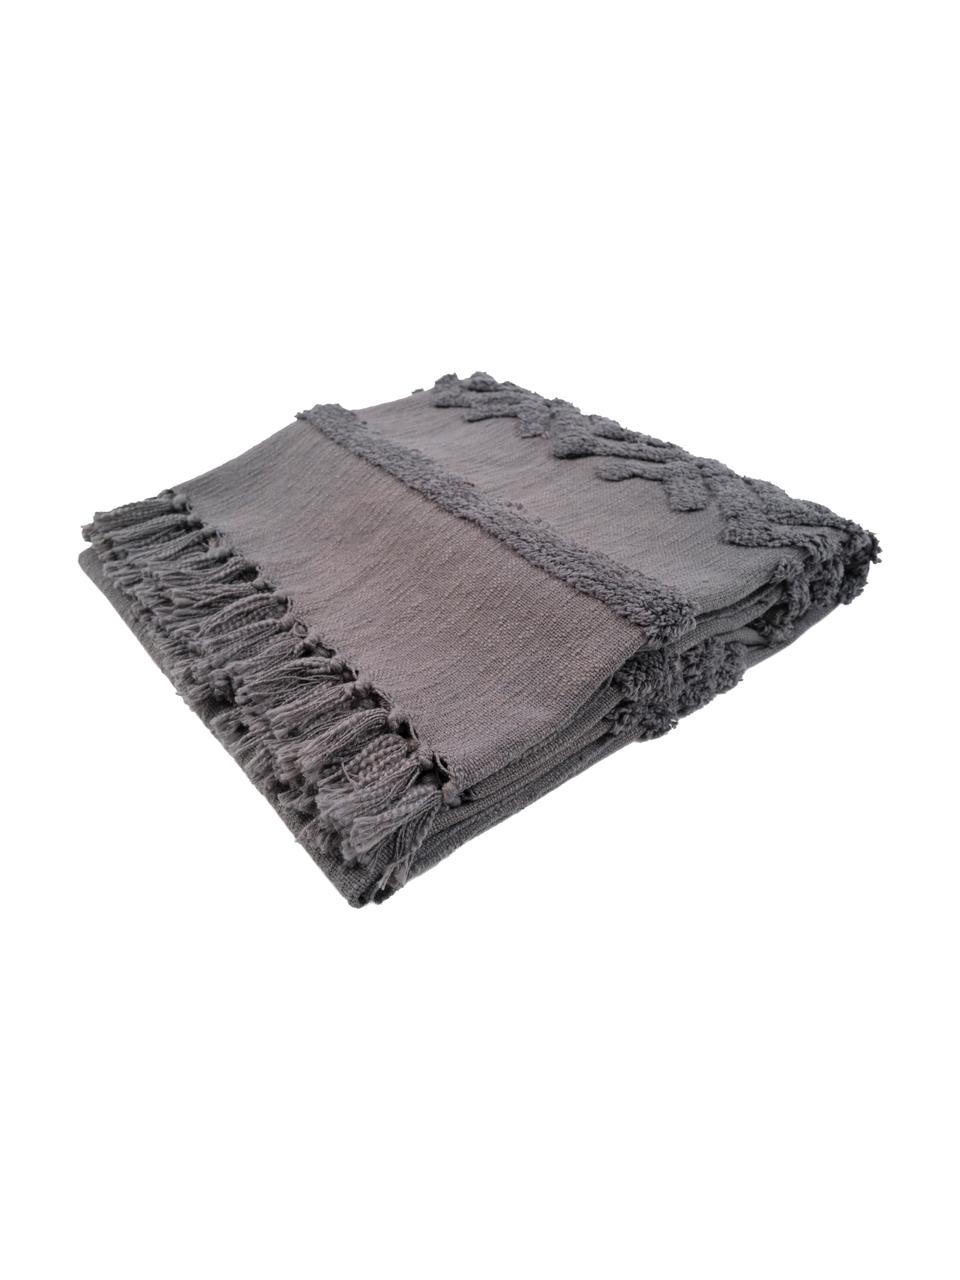 Boho-Baumwolldecke Adara mit getuftetem Muster, 100% Baumwolle, Grau, 130 x 170 cm